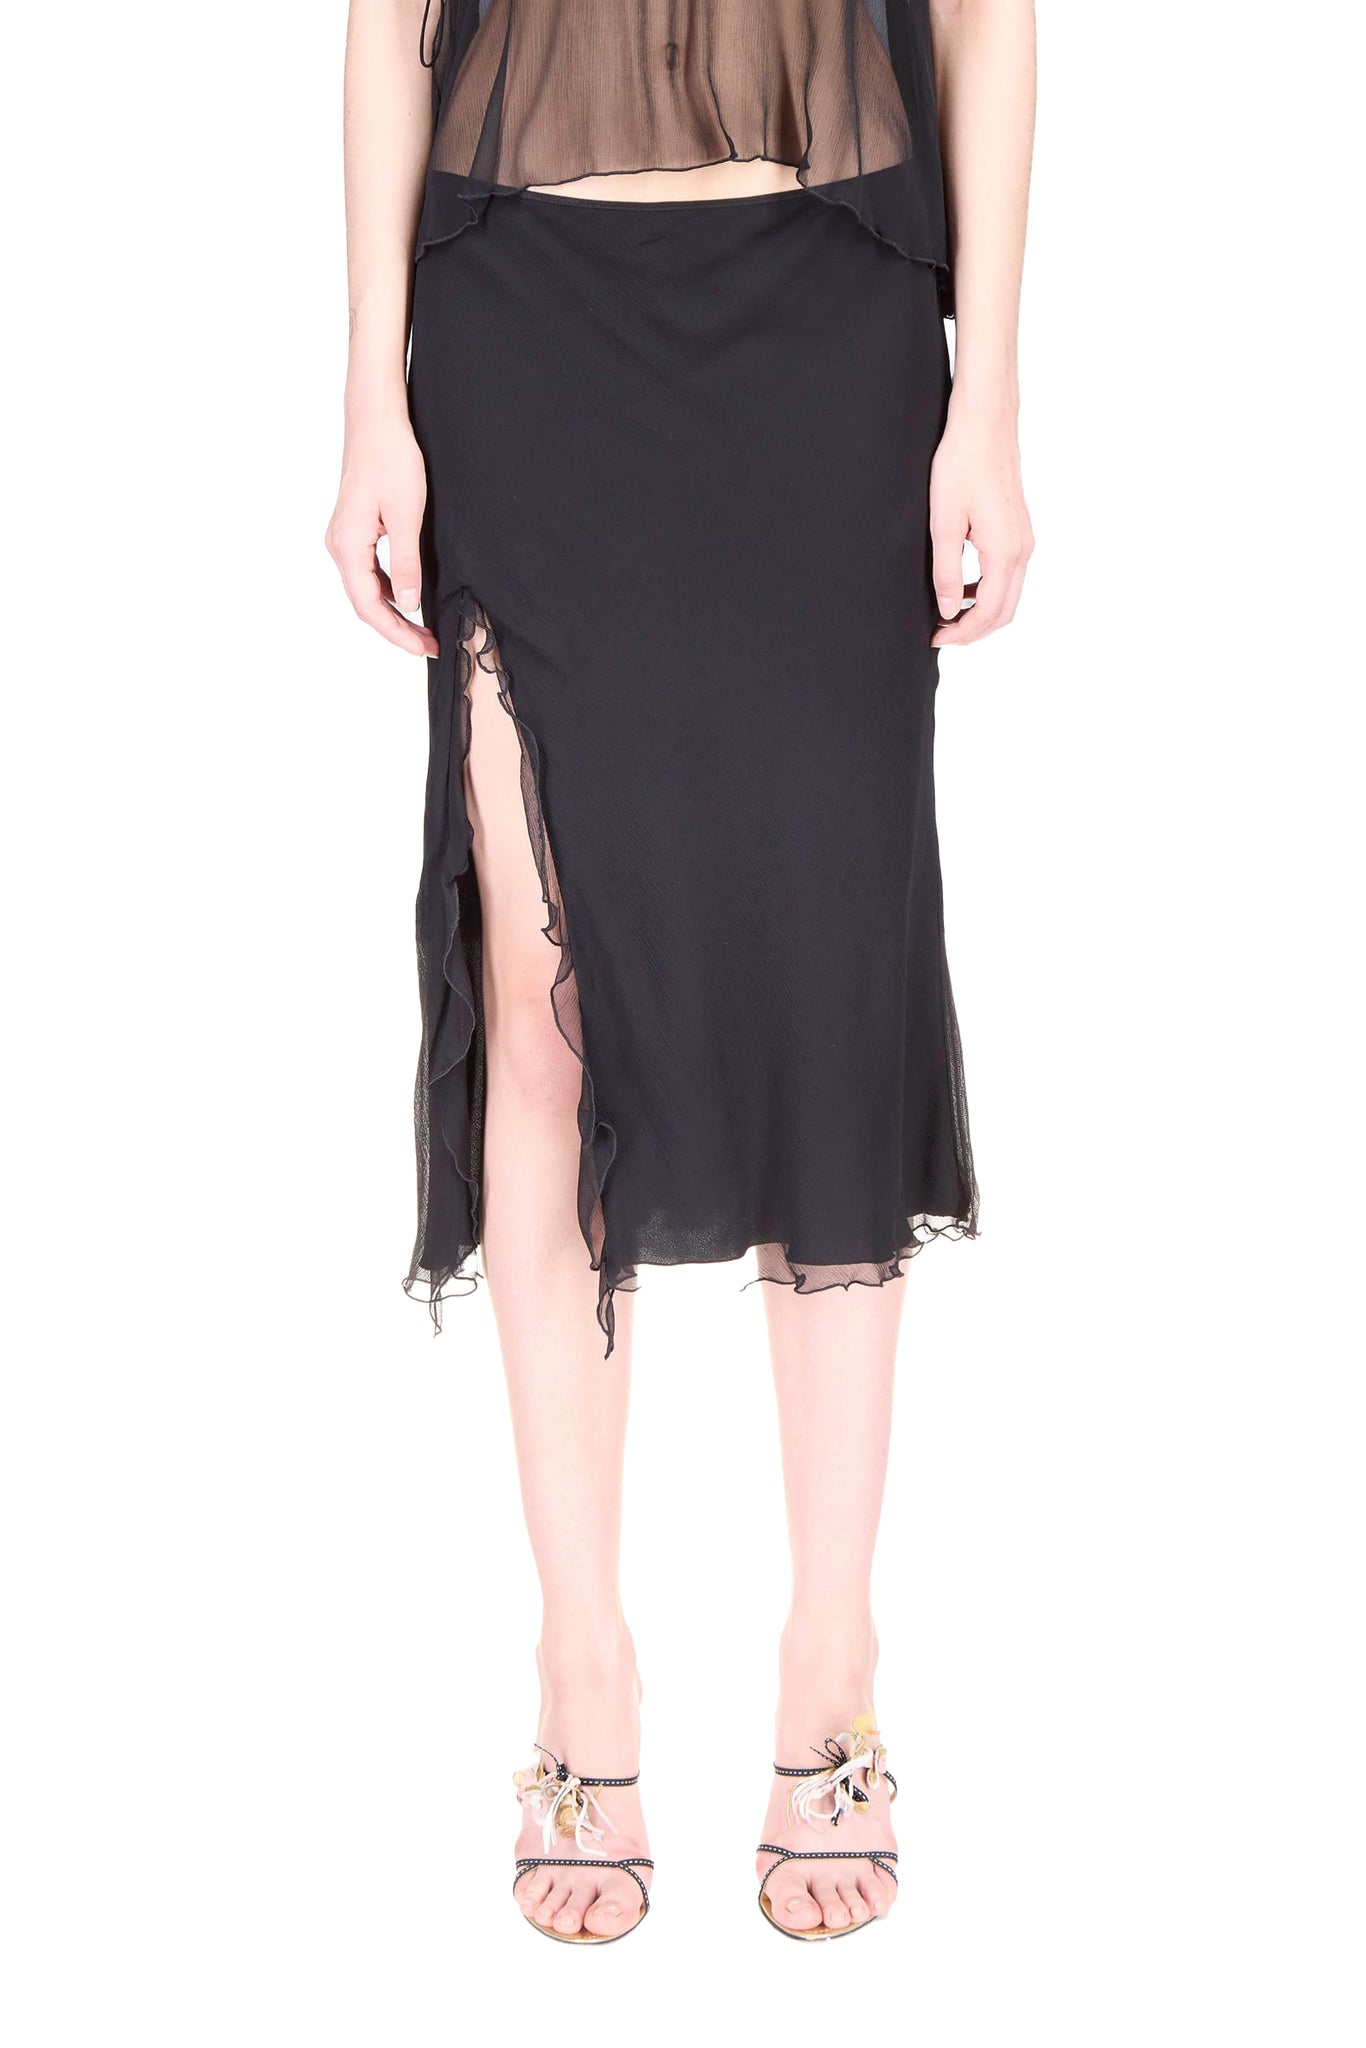 Black Chiffon Ruffled High Slit Skirt